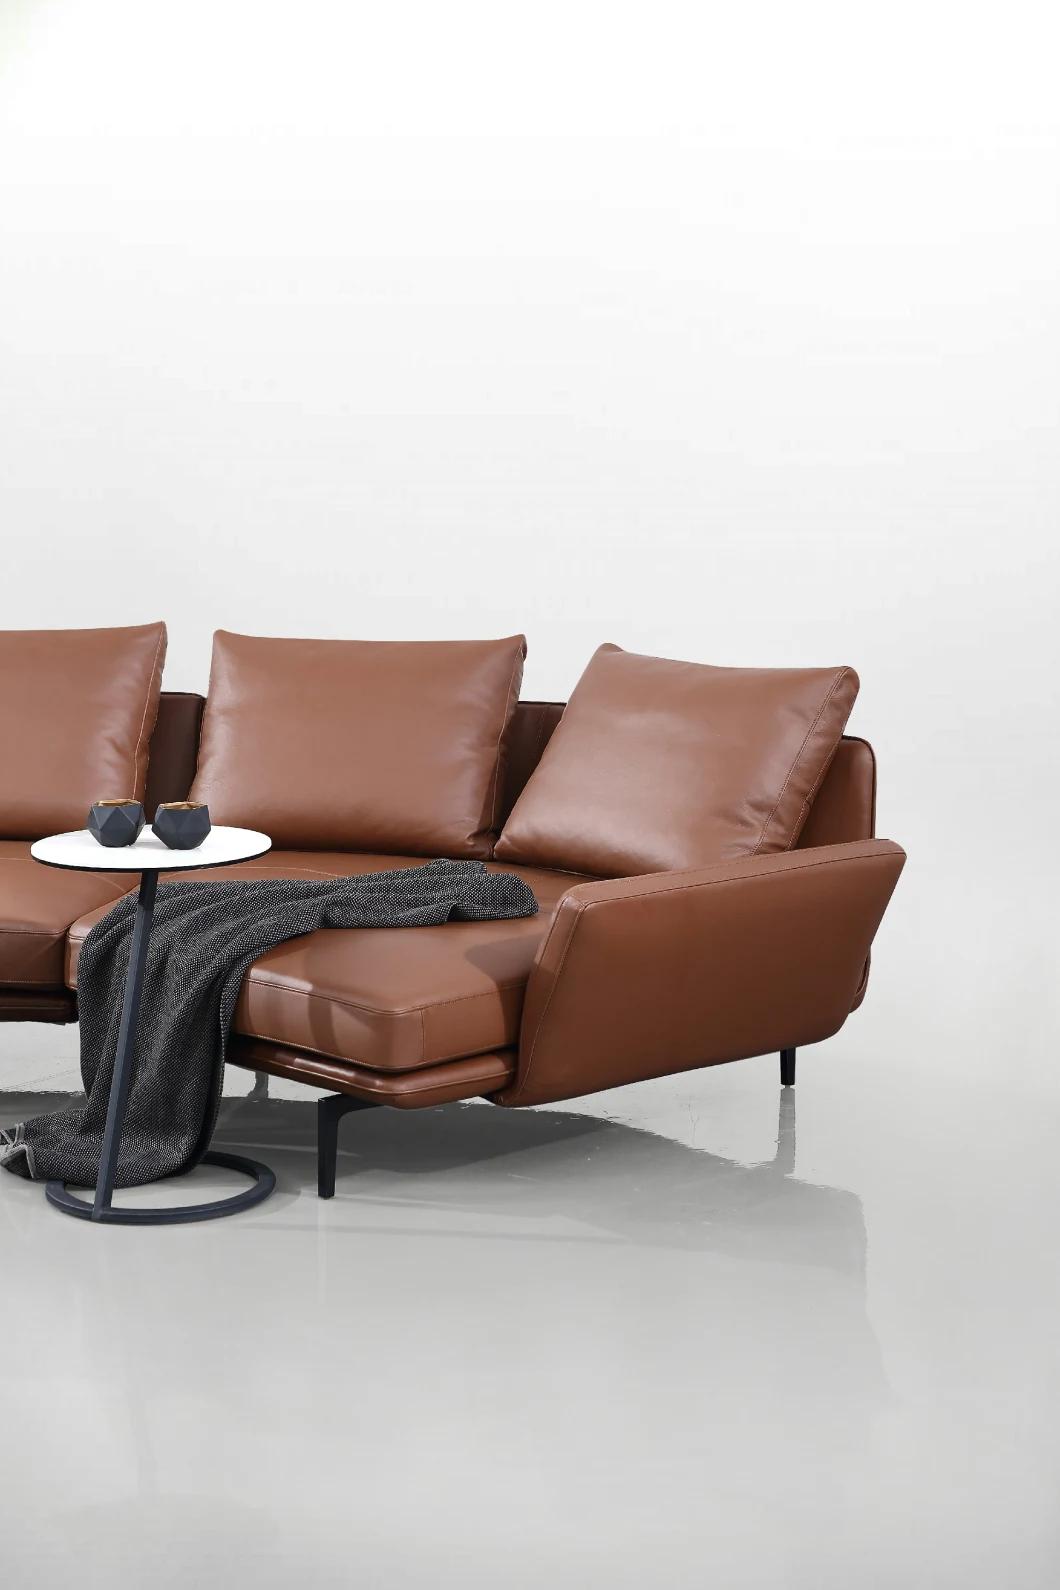 New Modern Home Furniture Multi-Functional Sectional Fabric Sofa Living Room Sofa